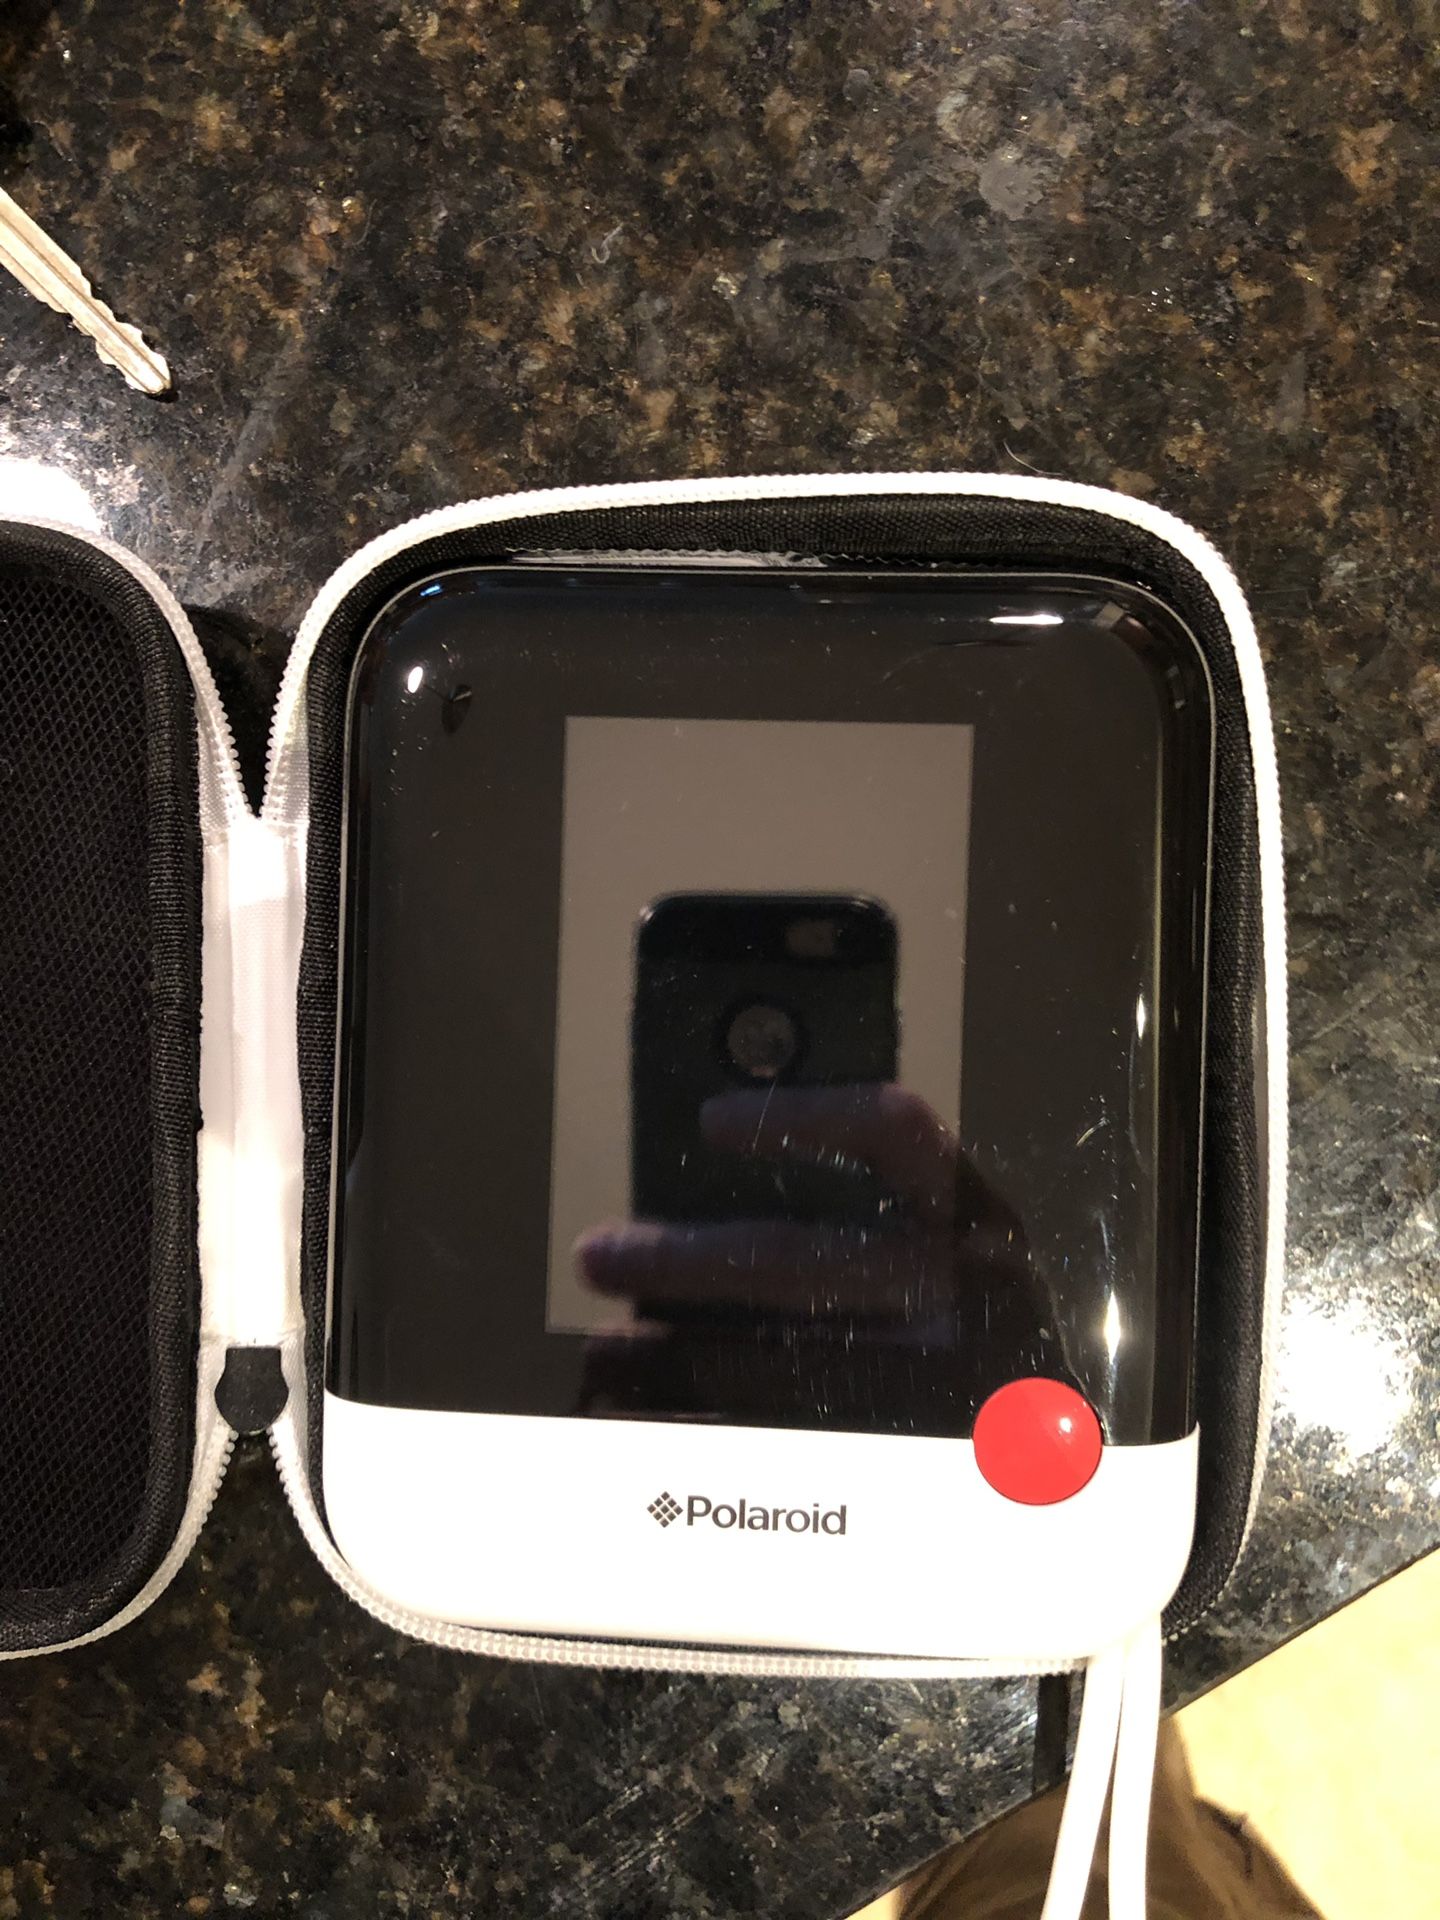 Polaroid pop camera and case